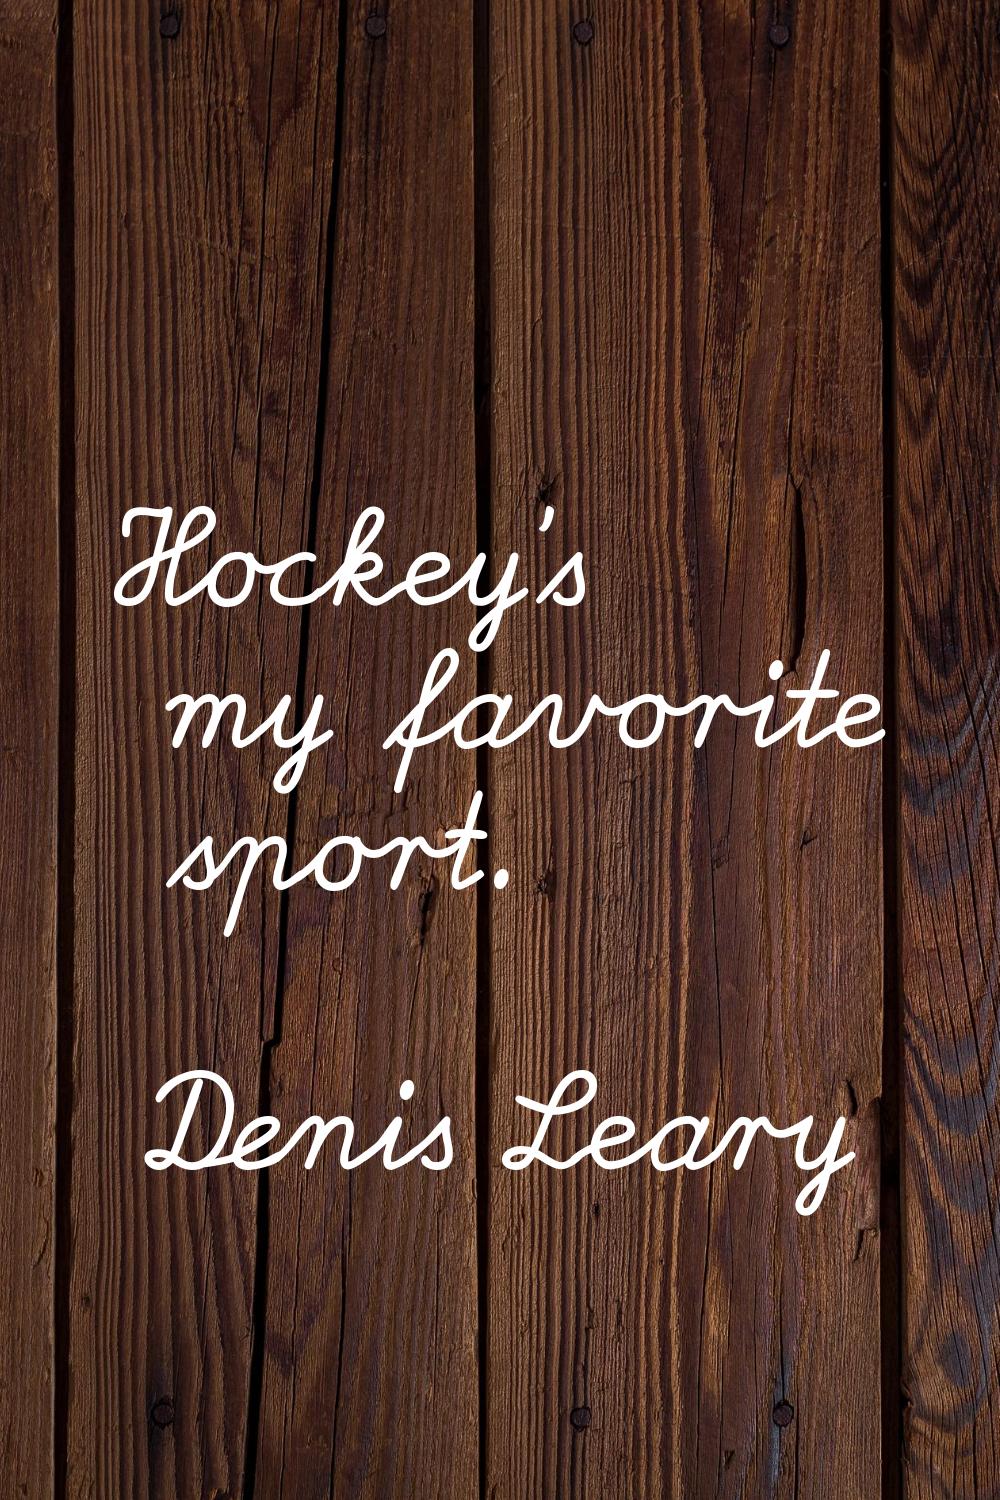 Hockey's my favorite sport.